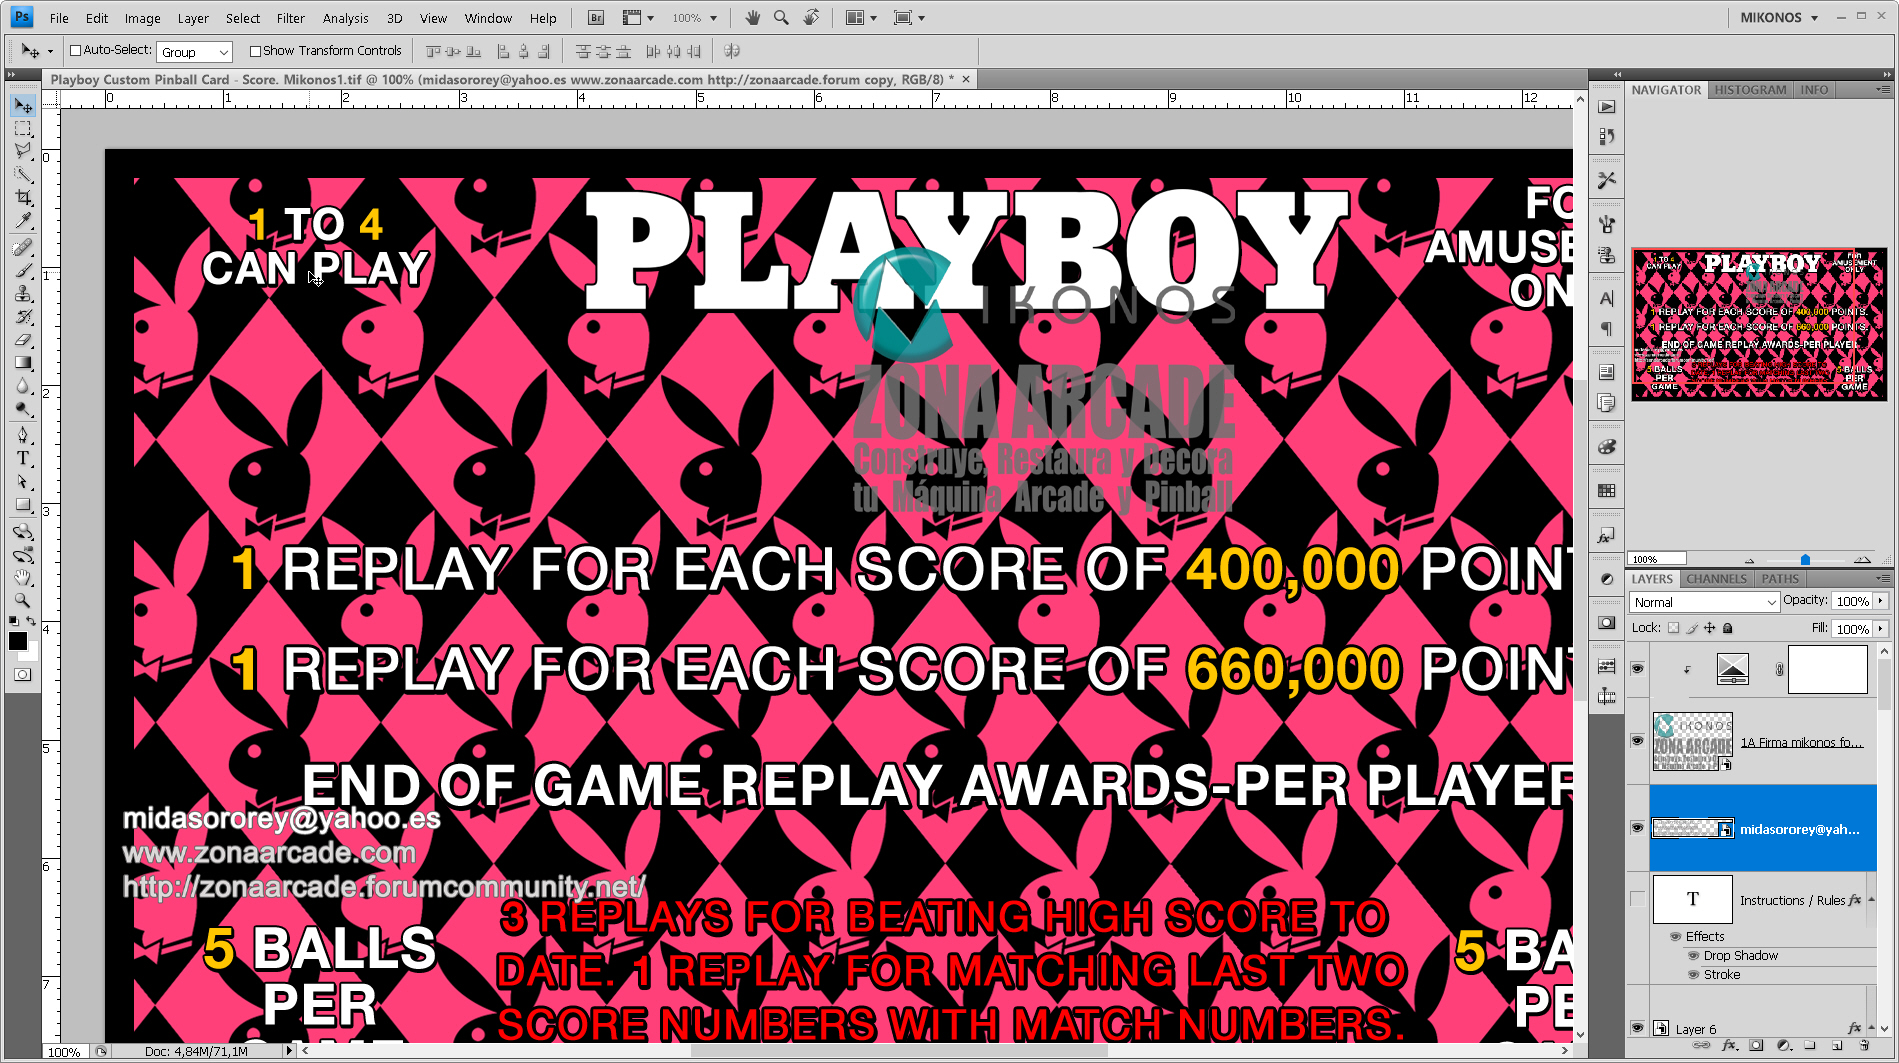 Playboy%20Custom%20Pinball%20Card%20-%20Score.%20Mikonos2.jpg